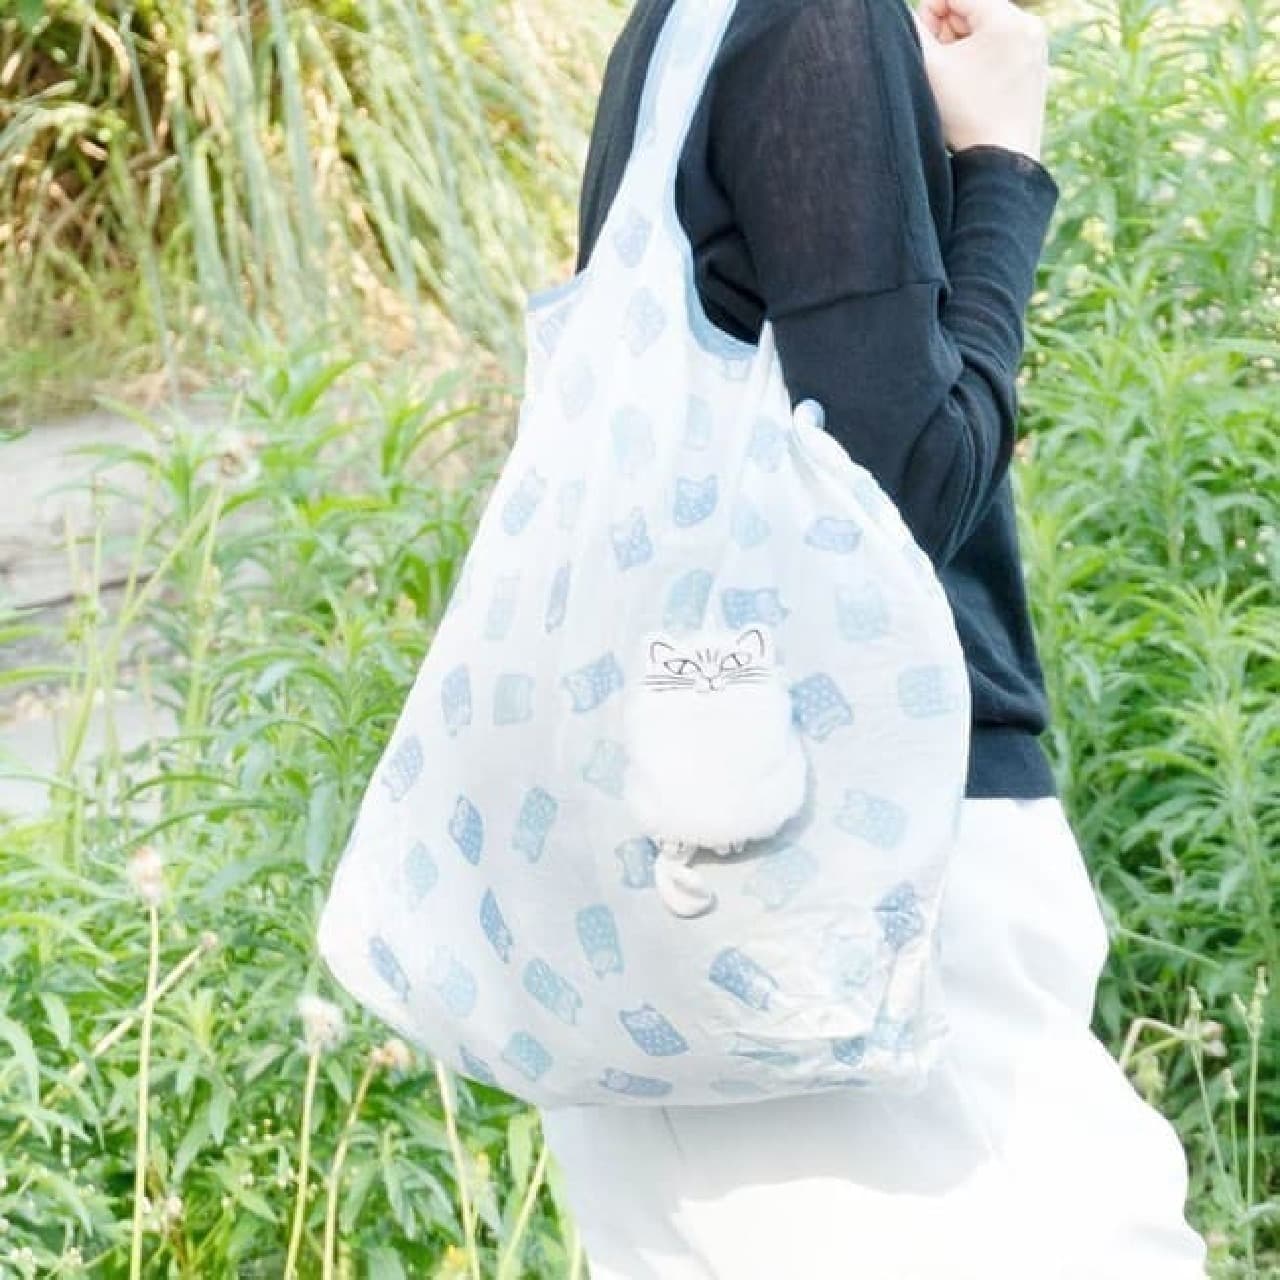 Lisa Larson's eco bag 4-piece set --Spat L size, storage bag integrated type, etc.